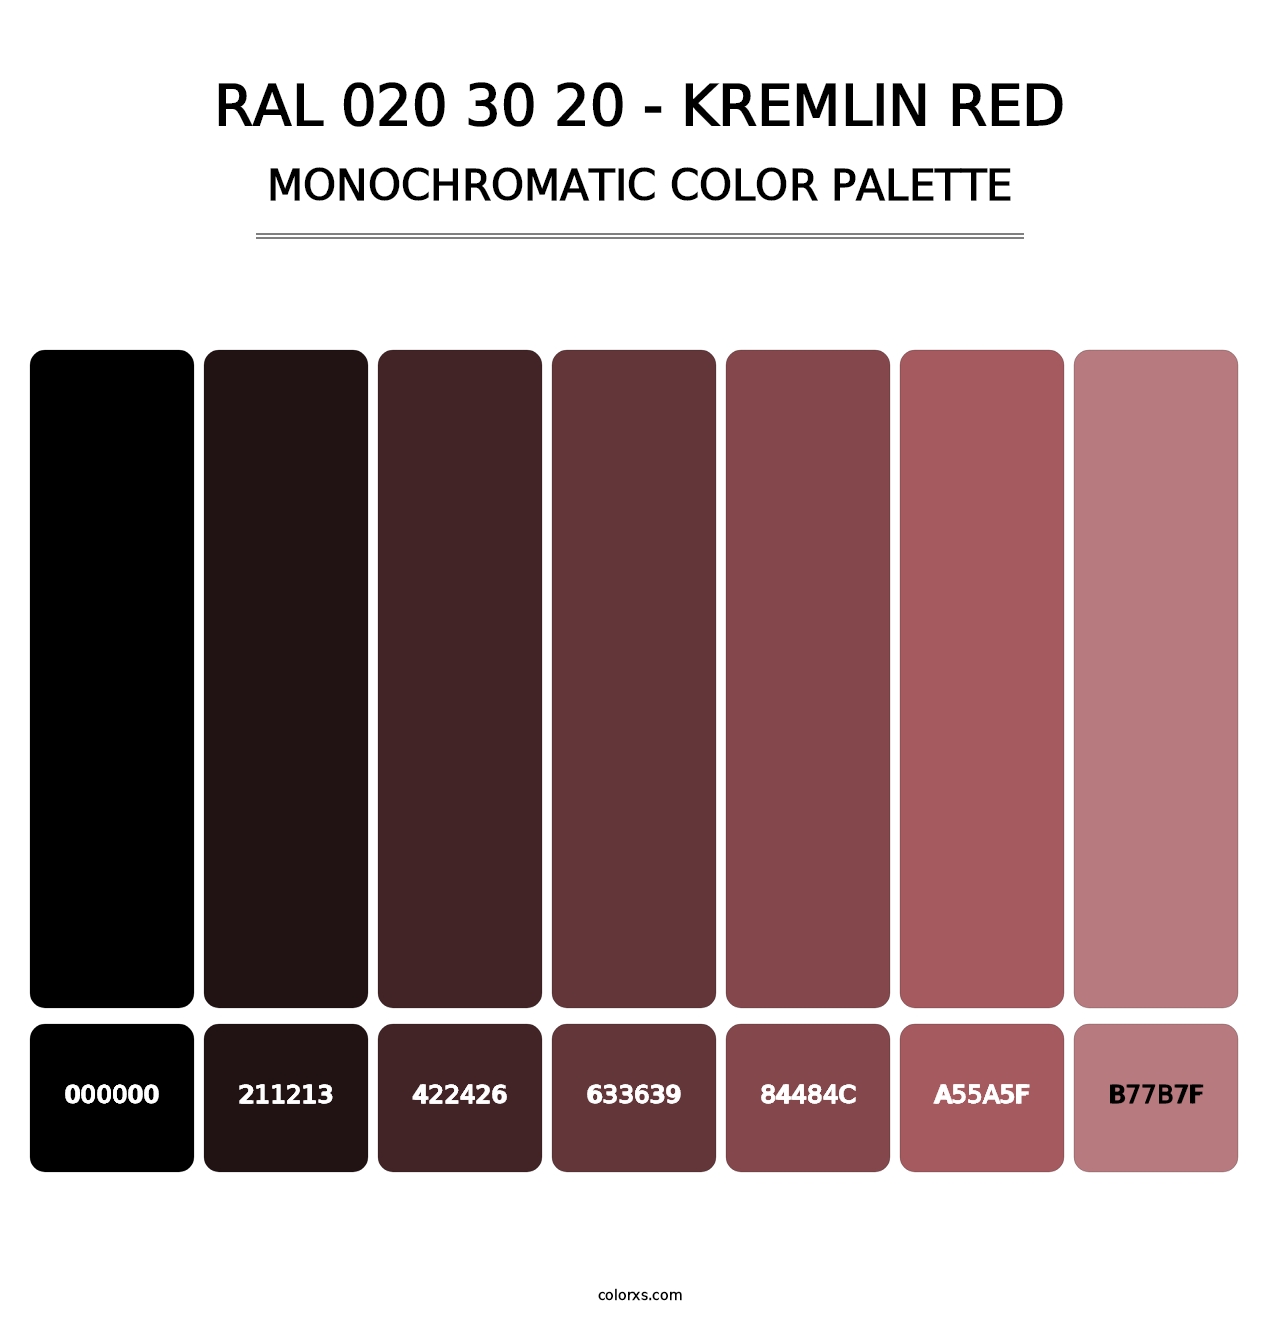 RAL 020 30 20 - Kremlin Red - Monochromatic Color Palette